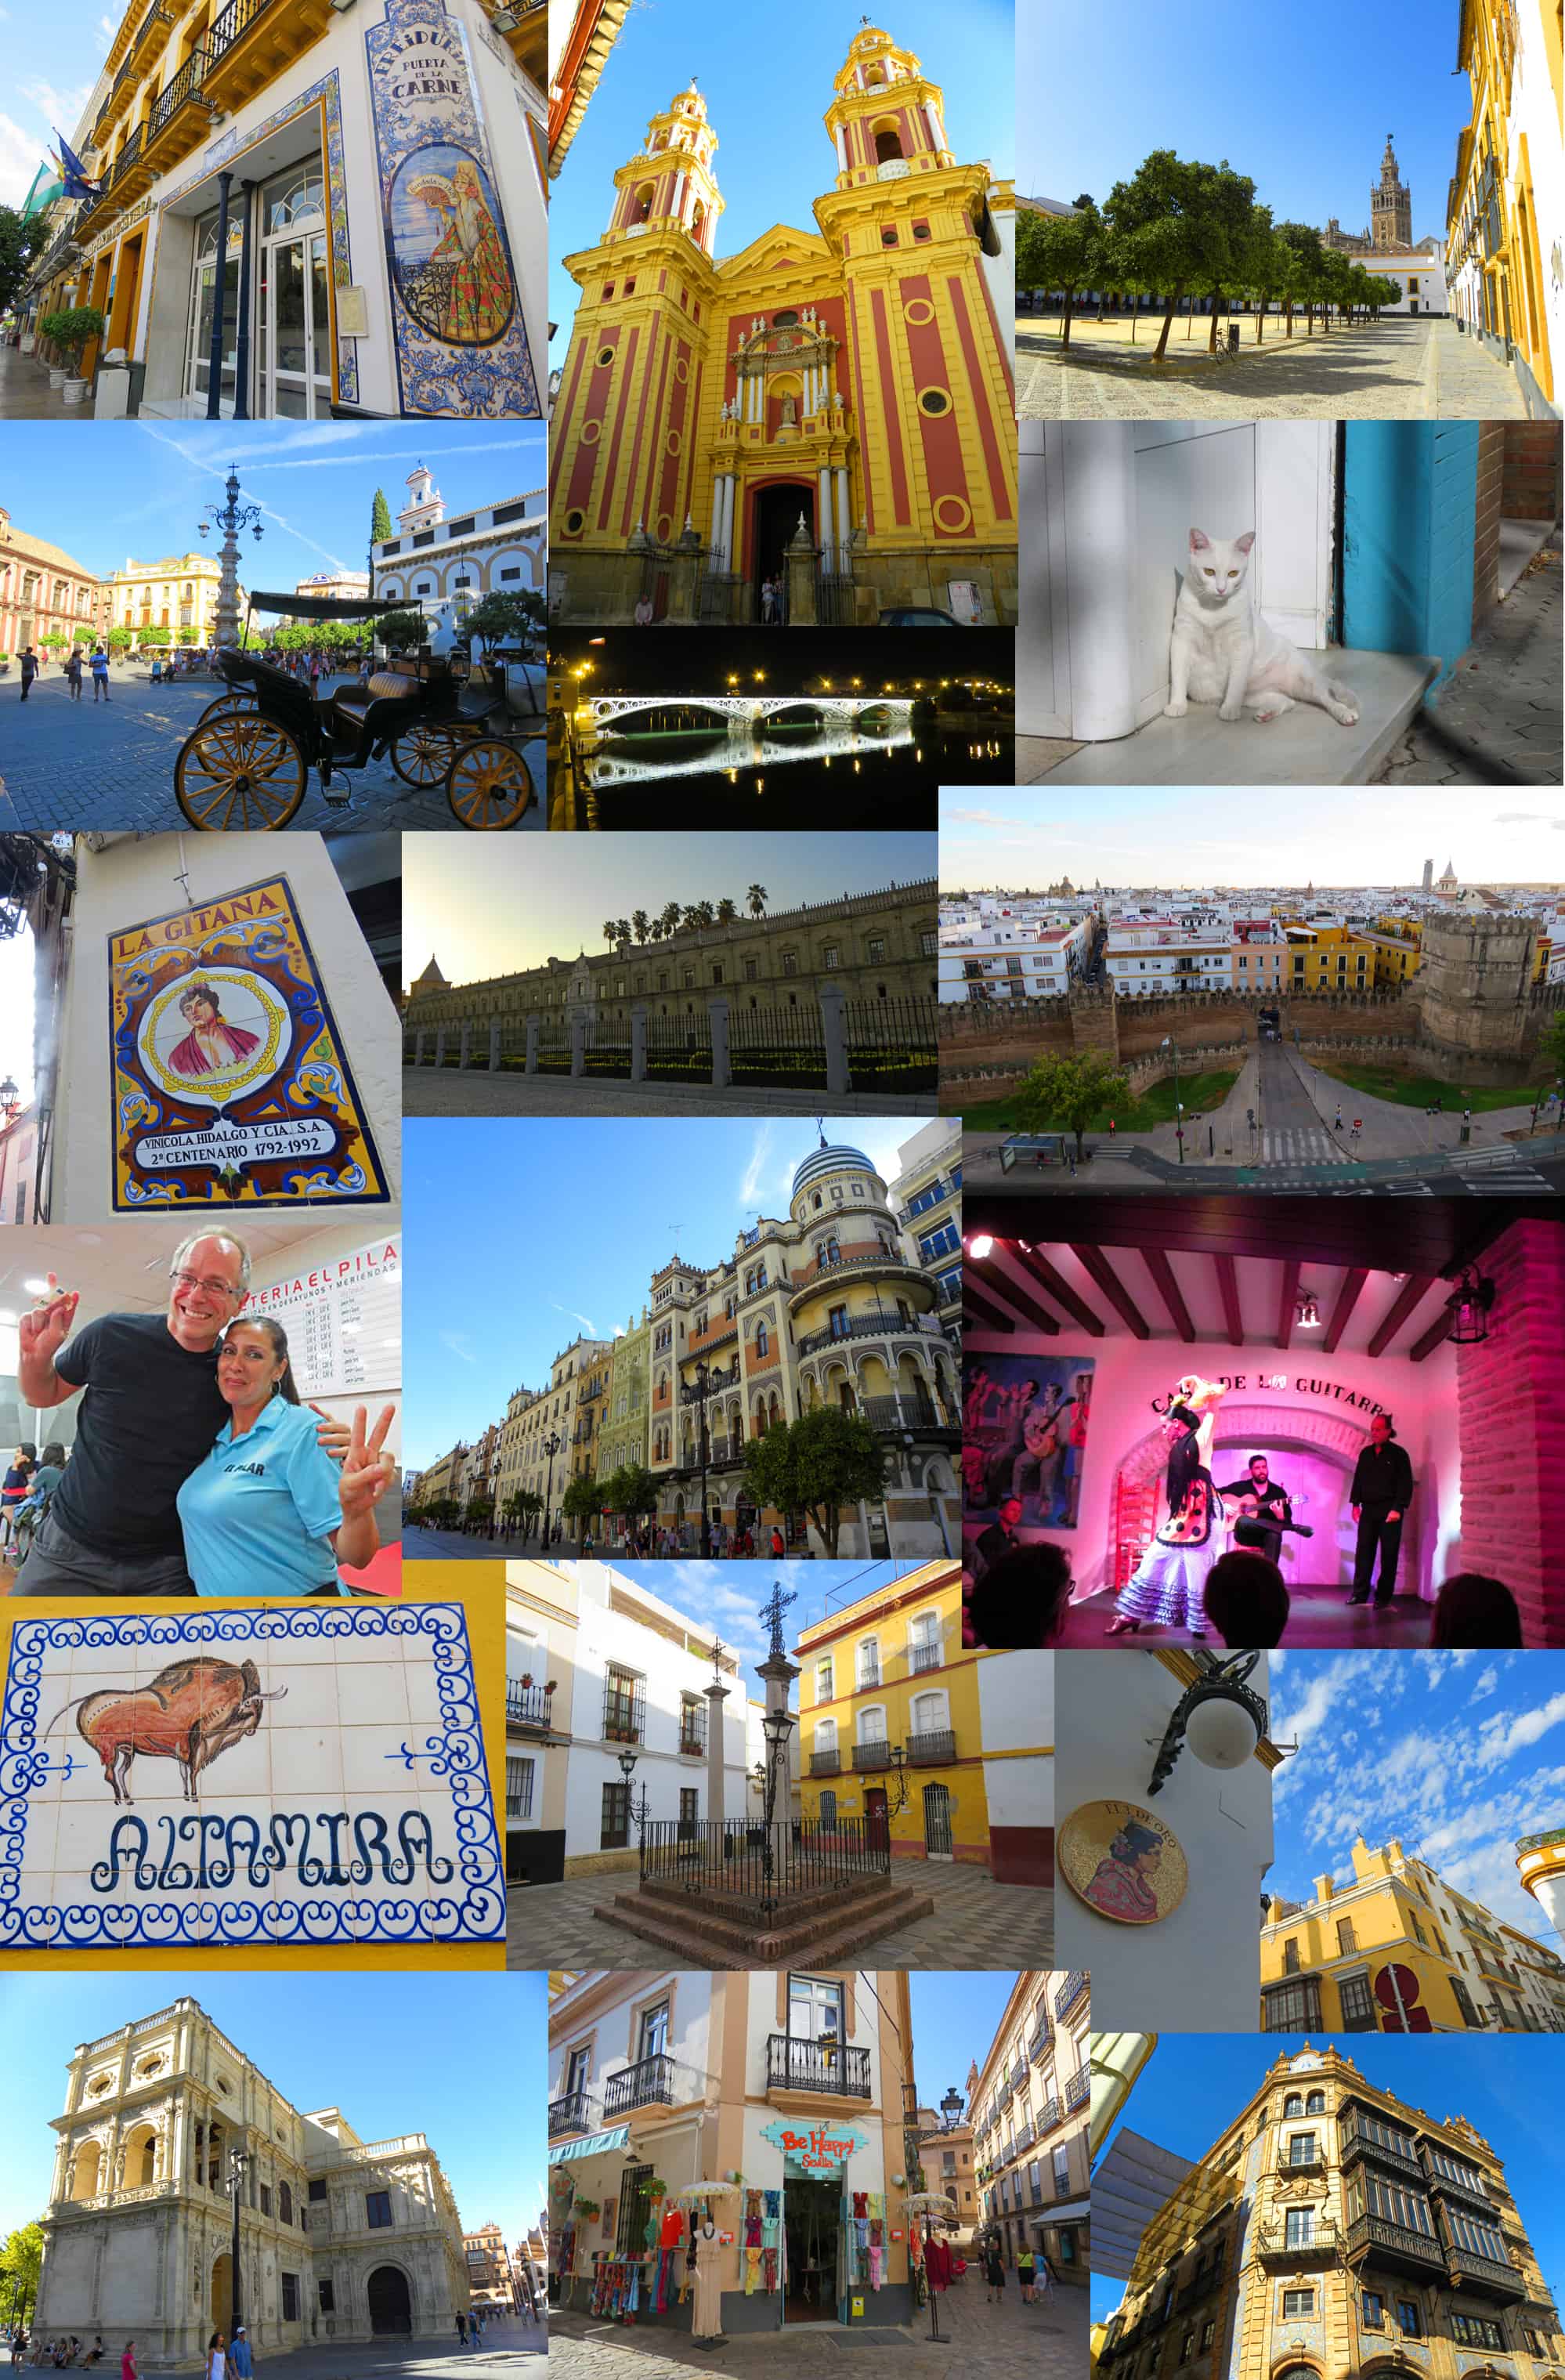 Images of Seville, Spain